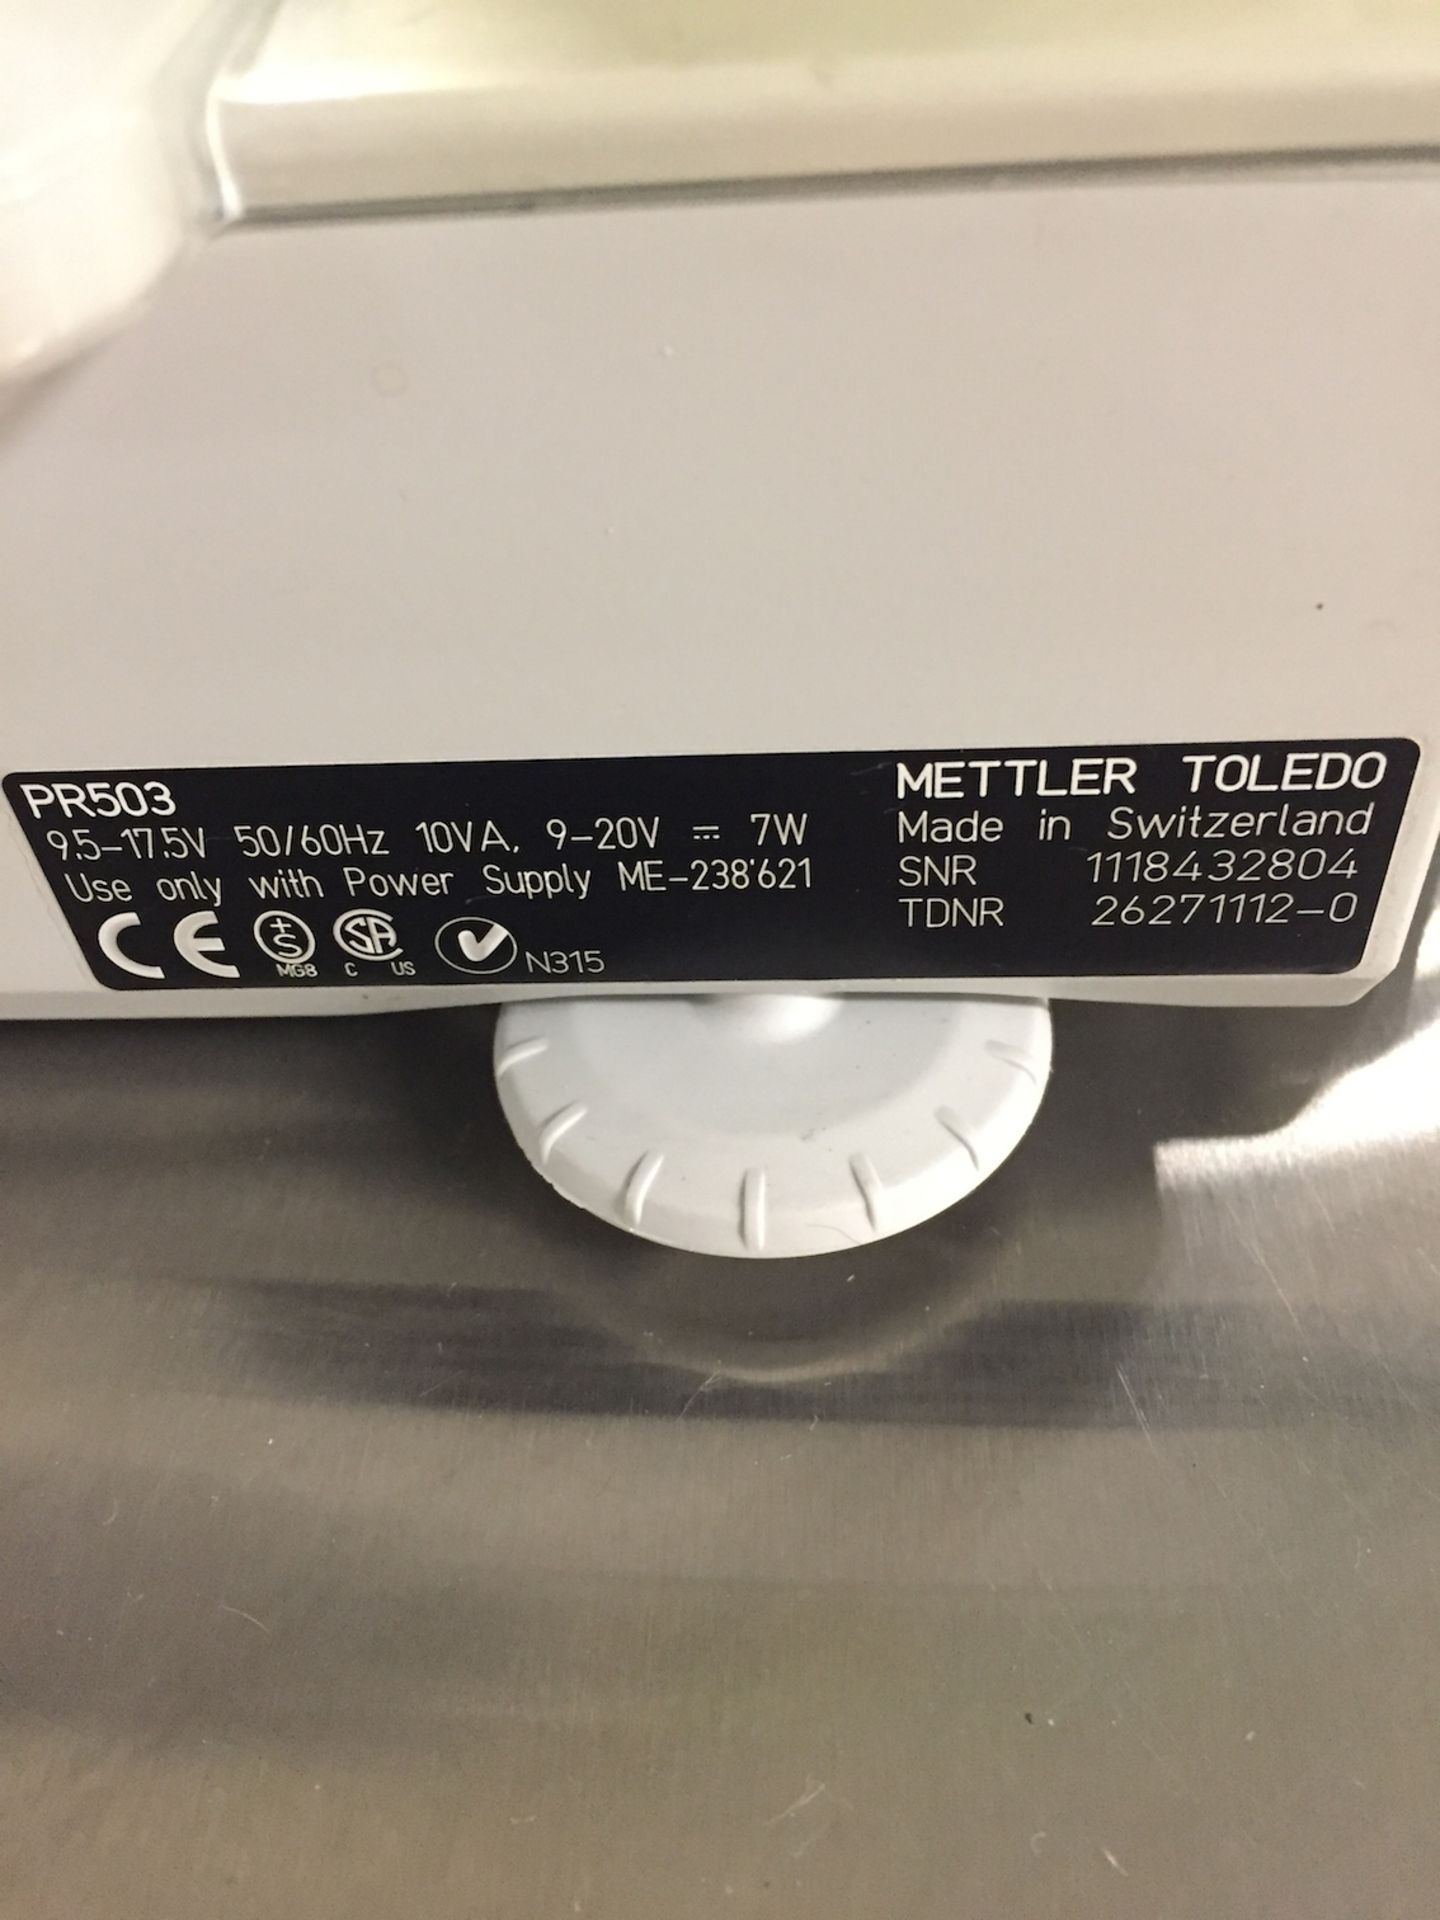 Mettler Toledo Scale PR503, SNR 1118432804 - Image 2 of 3